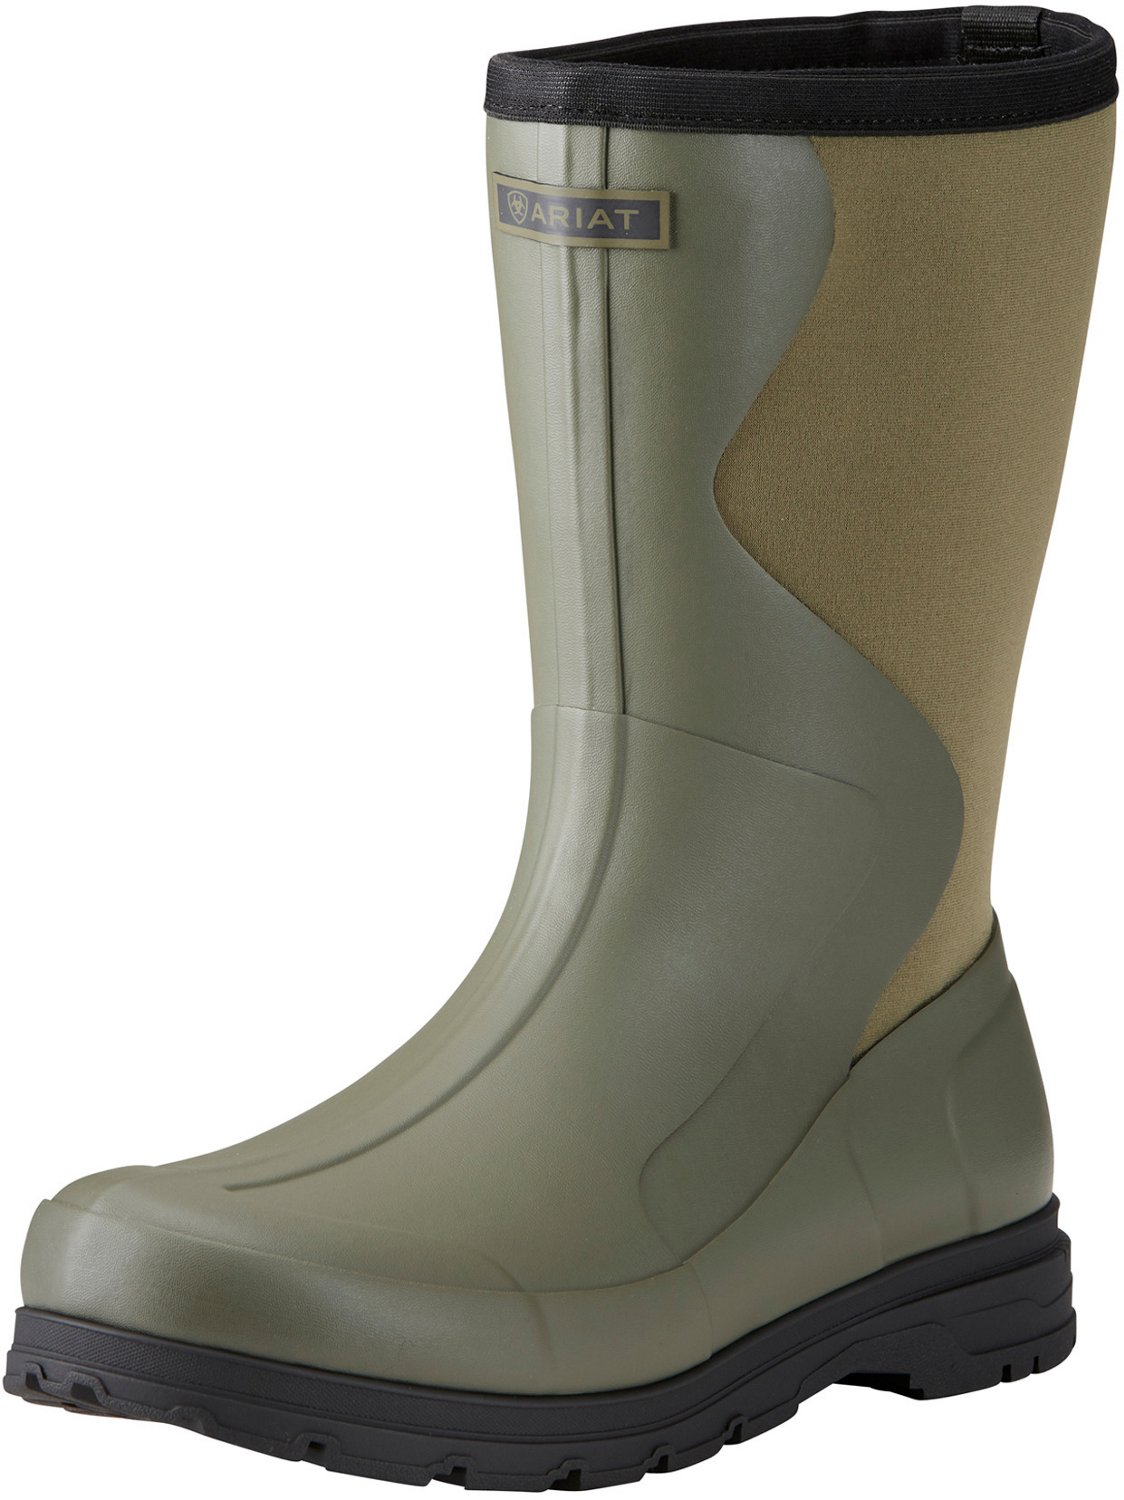 Rubber Boots | Rain Boots & Waterproof Boots | Academy